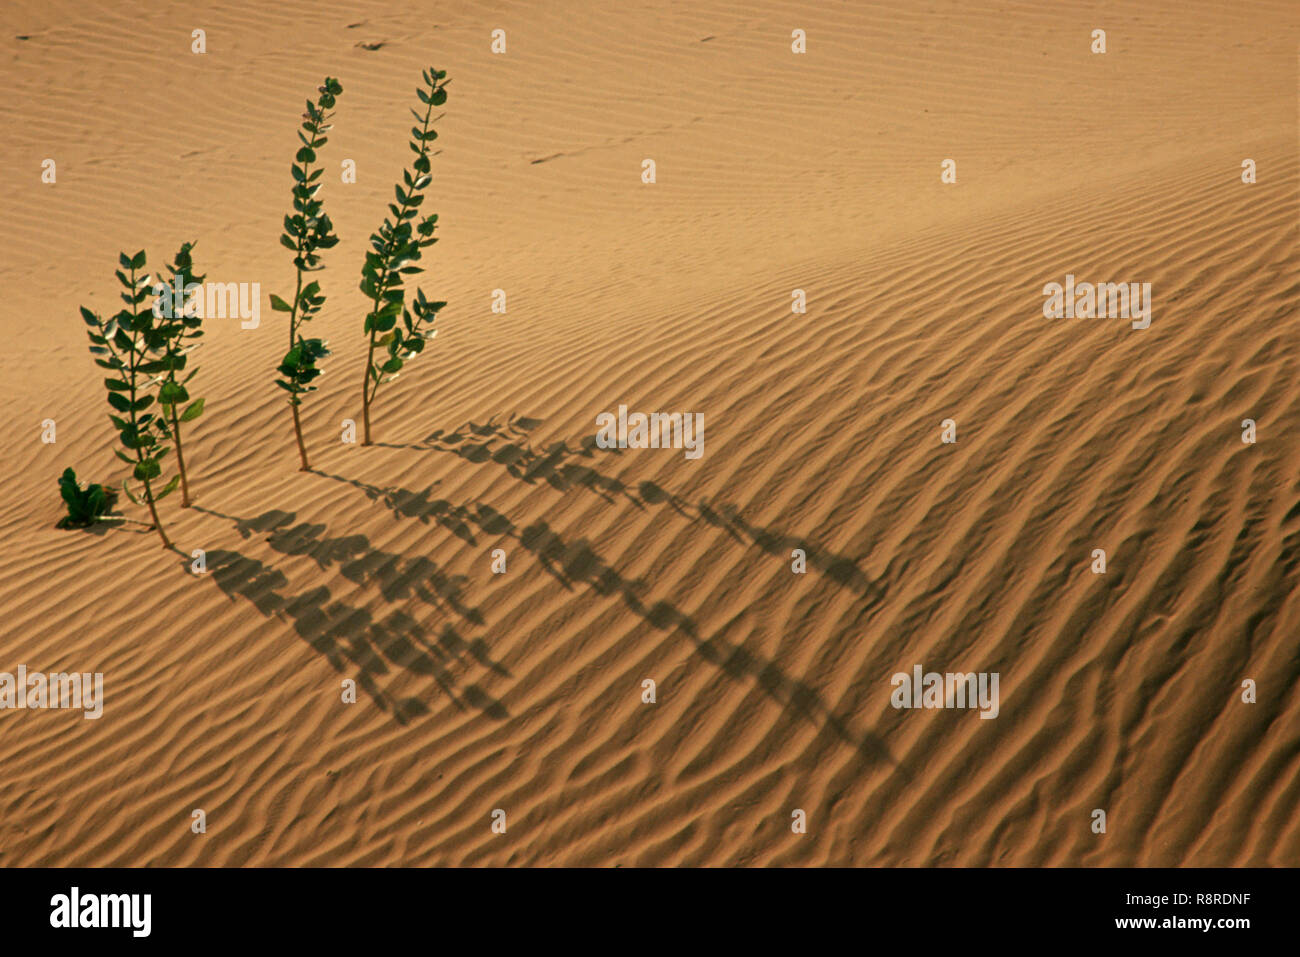 Sand, Dunes, dangri village, Jaisalmer, Rajasthan, India Stock Photo